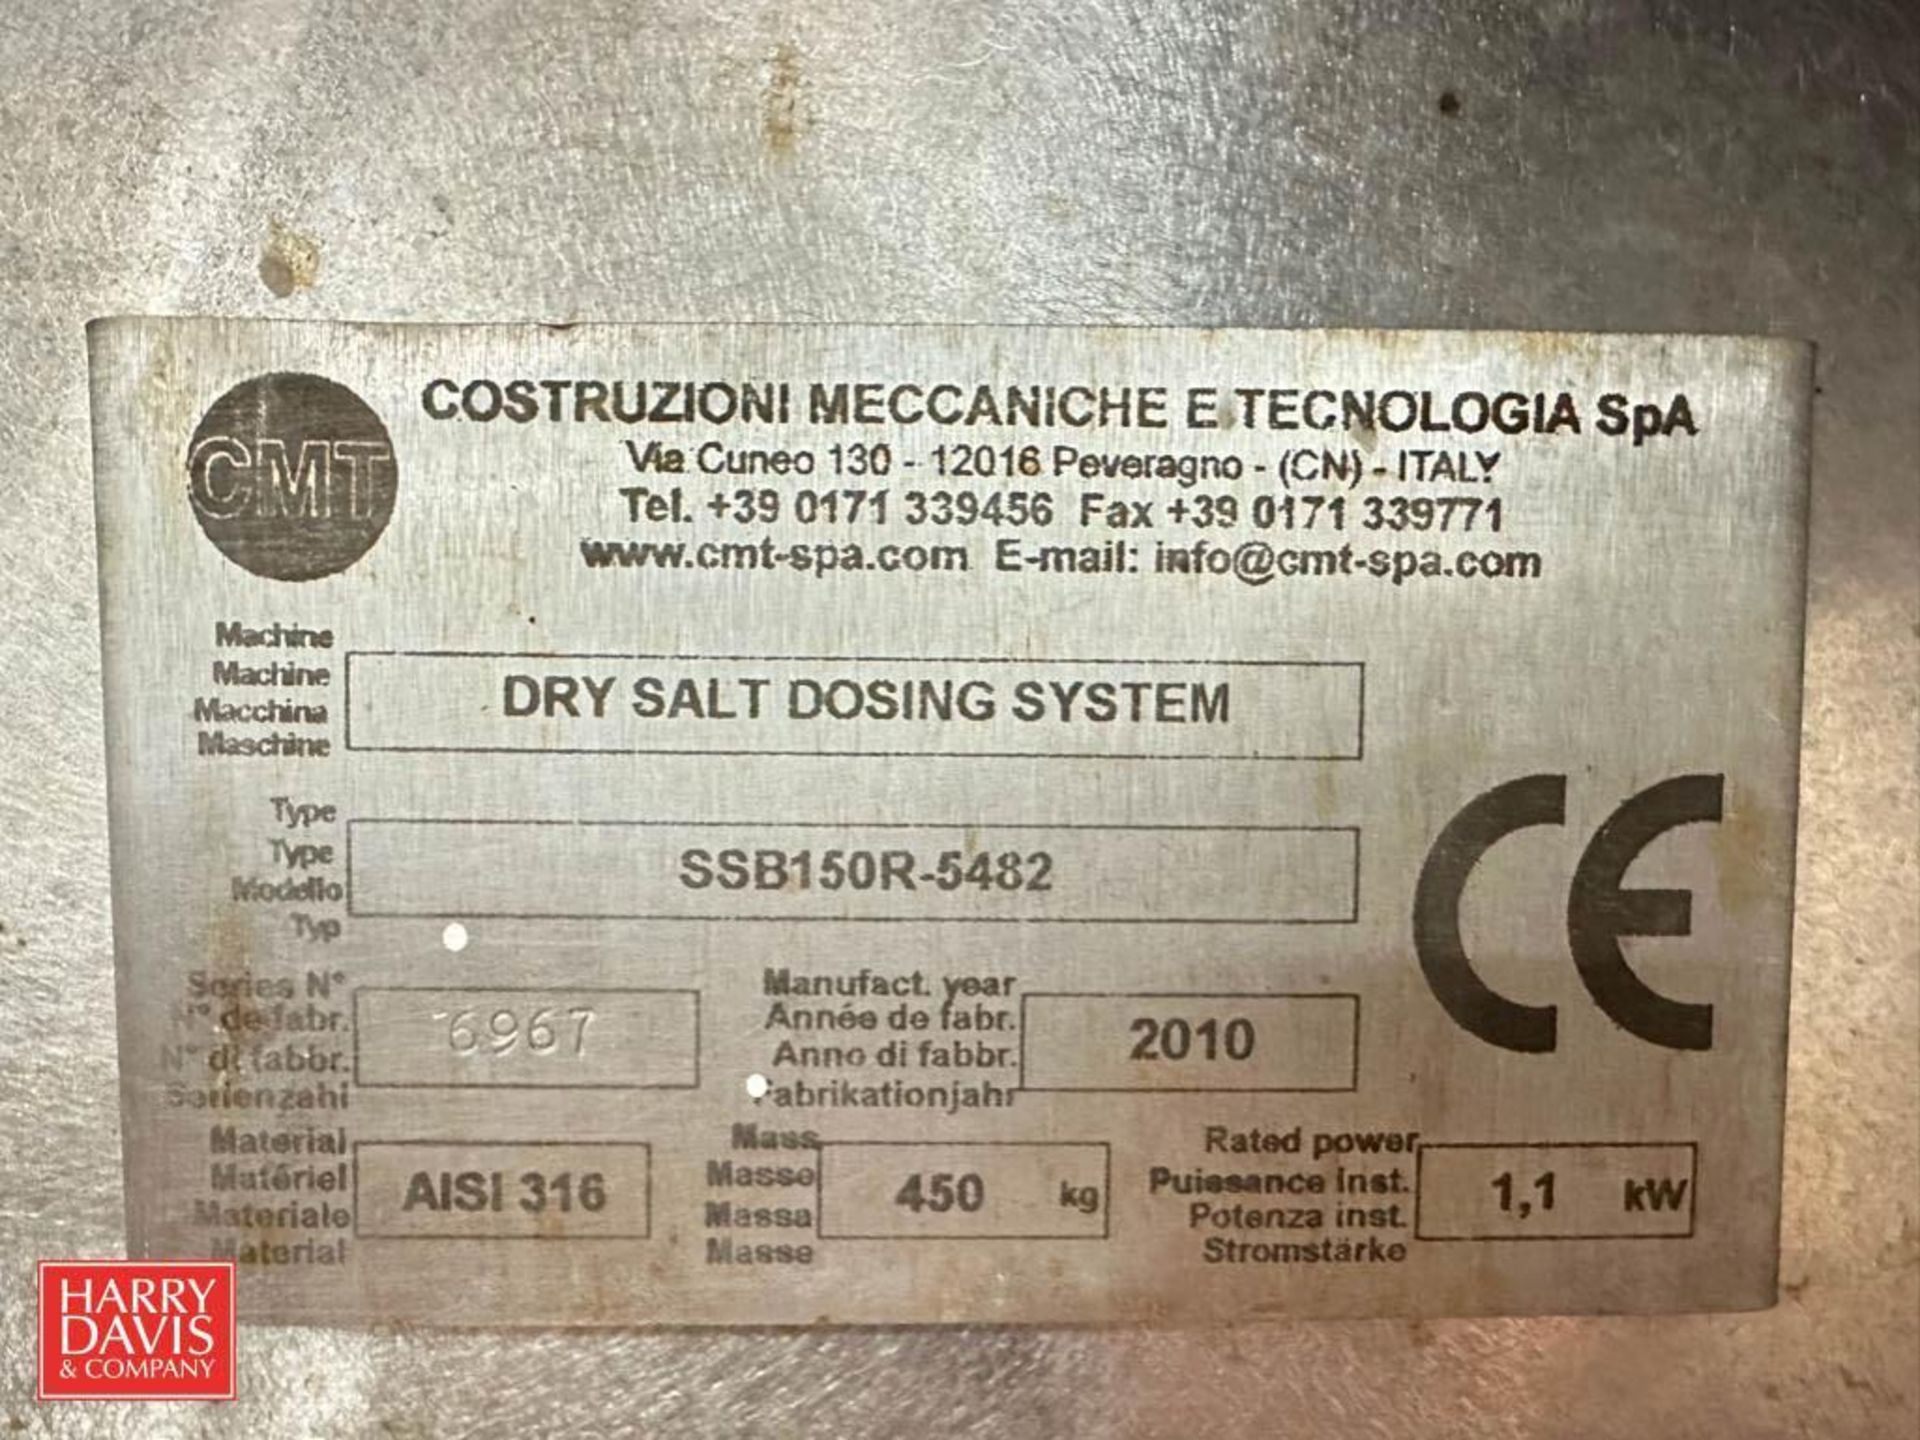 Comat S/S Dry Salt Dosing System, Model: SSB150R-5482, S/N: 6967 with S/S Platform: 50" x 4’ - Image 3 of 6